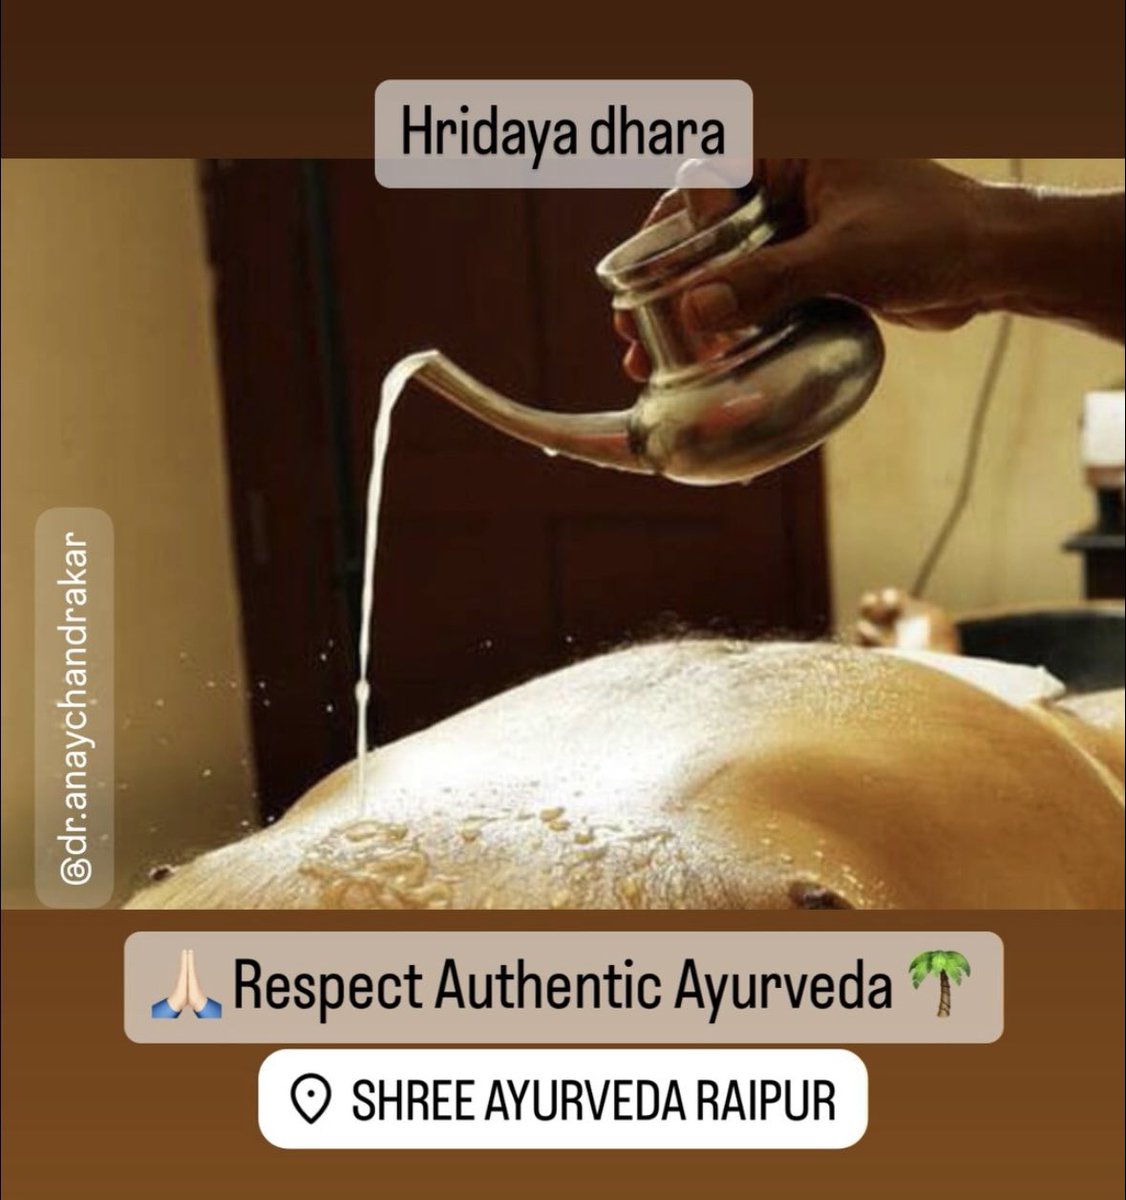 #hridayadhara #shreeayurvedaraipur #panchakarmatreatment #authenticayurveda #dranaychandrakar #respectayurveda #yoga #health #healthylifestyle #ayurvedalife #wellness #ayurvedaeveryday #india #meditation #fitness #nature #ayurvedatreatment #vata #medicine #kapha #herbal #pitta